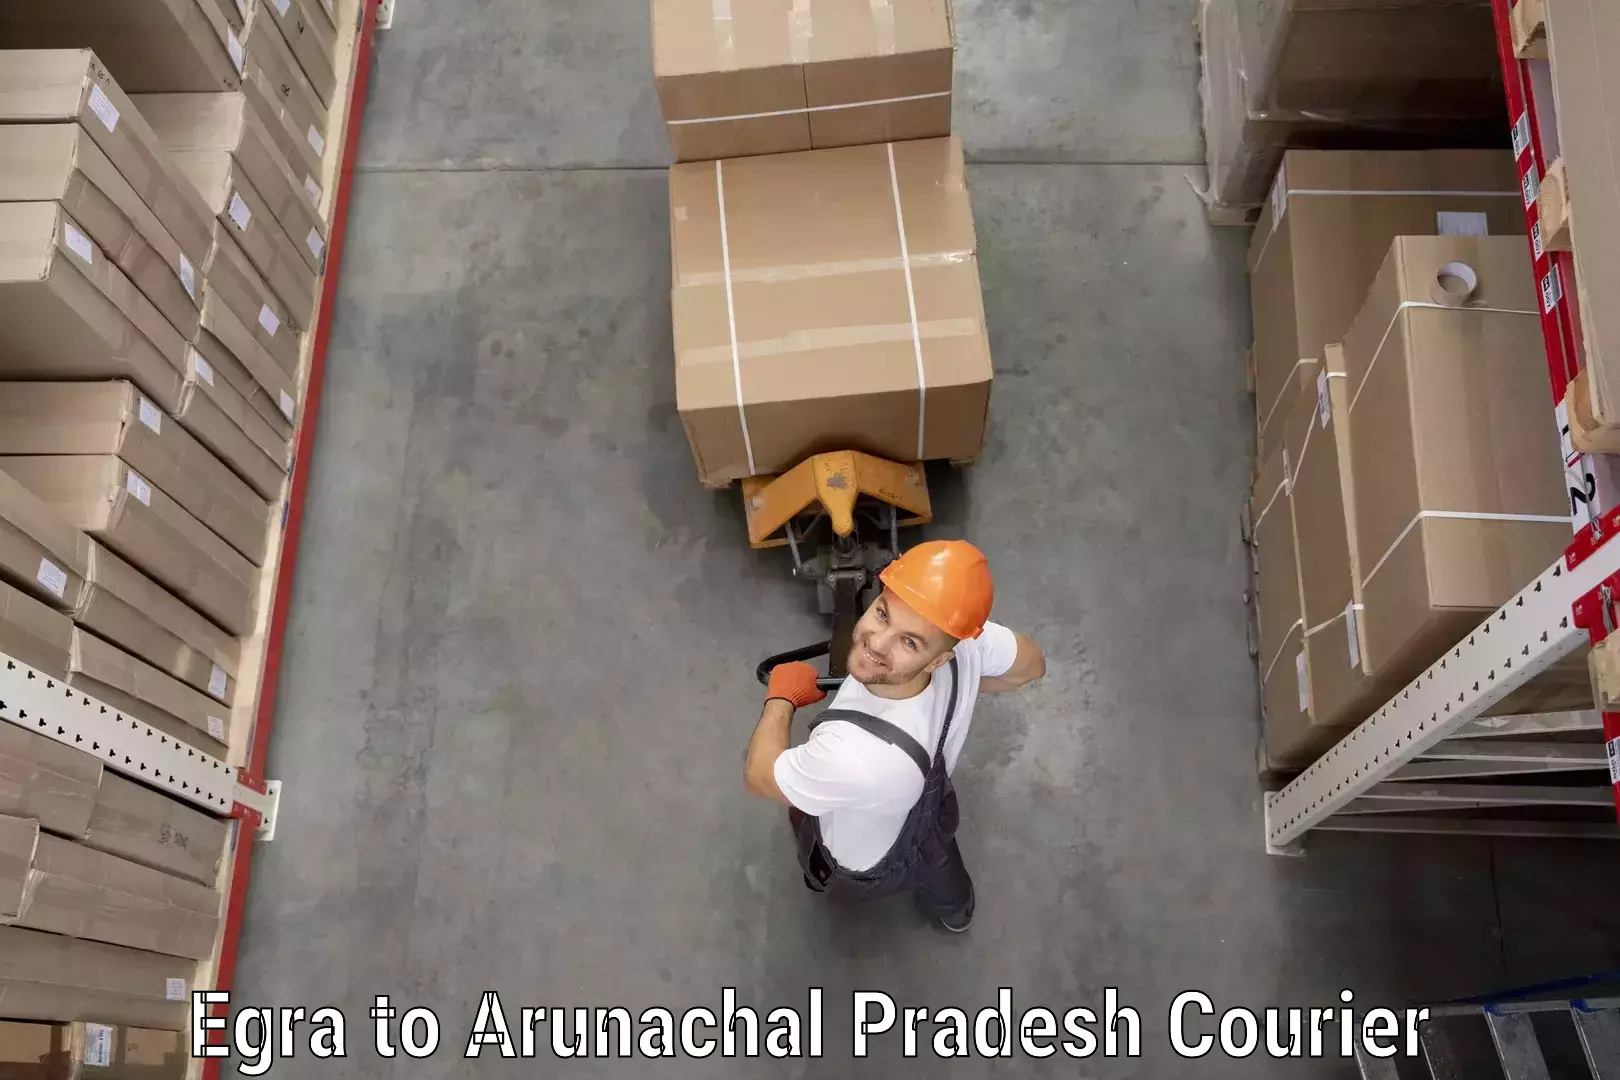 Optimized courier strategies Egra to Arunachal Pradesh